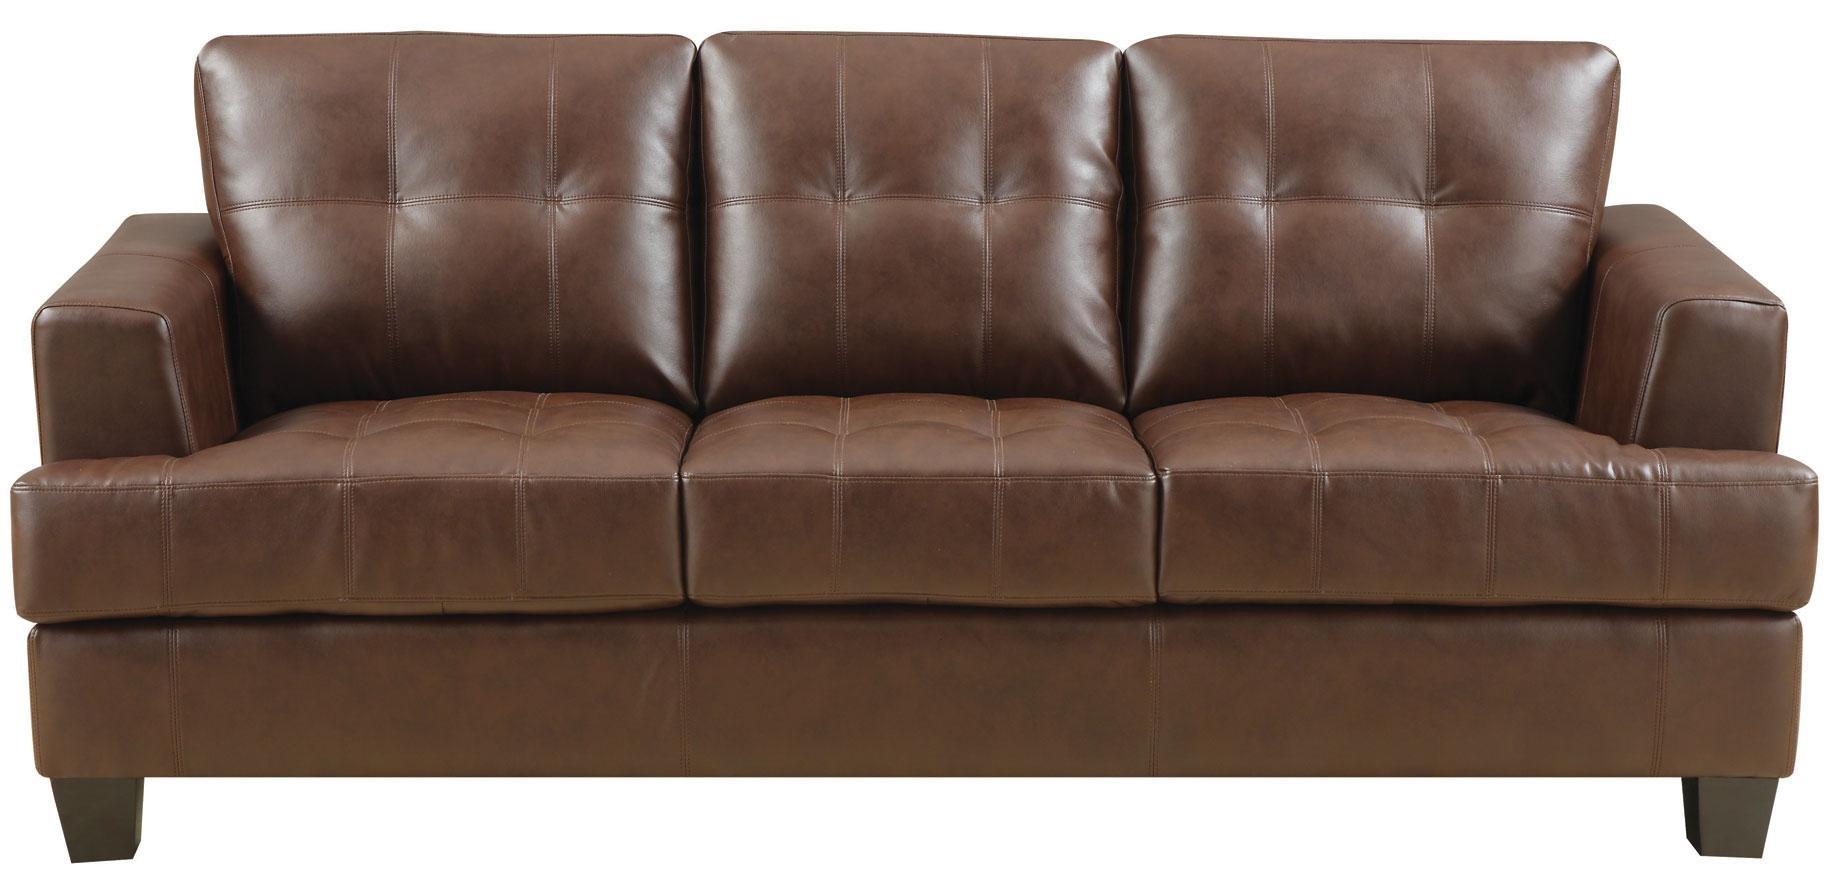 Transitional Sleeper Sofa 504070 Samuel 504070 in Dark Brown Leatherette